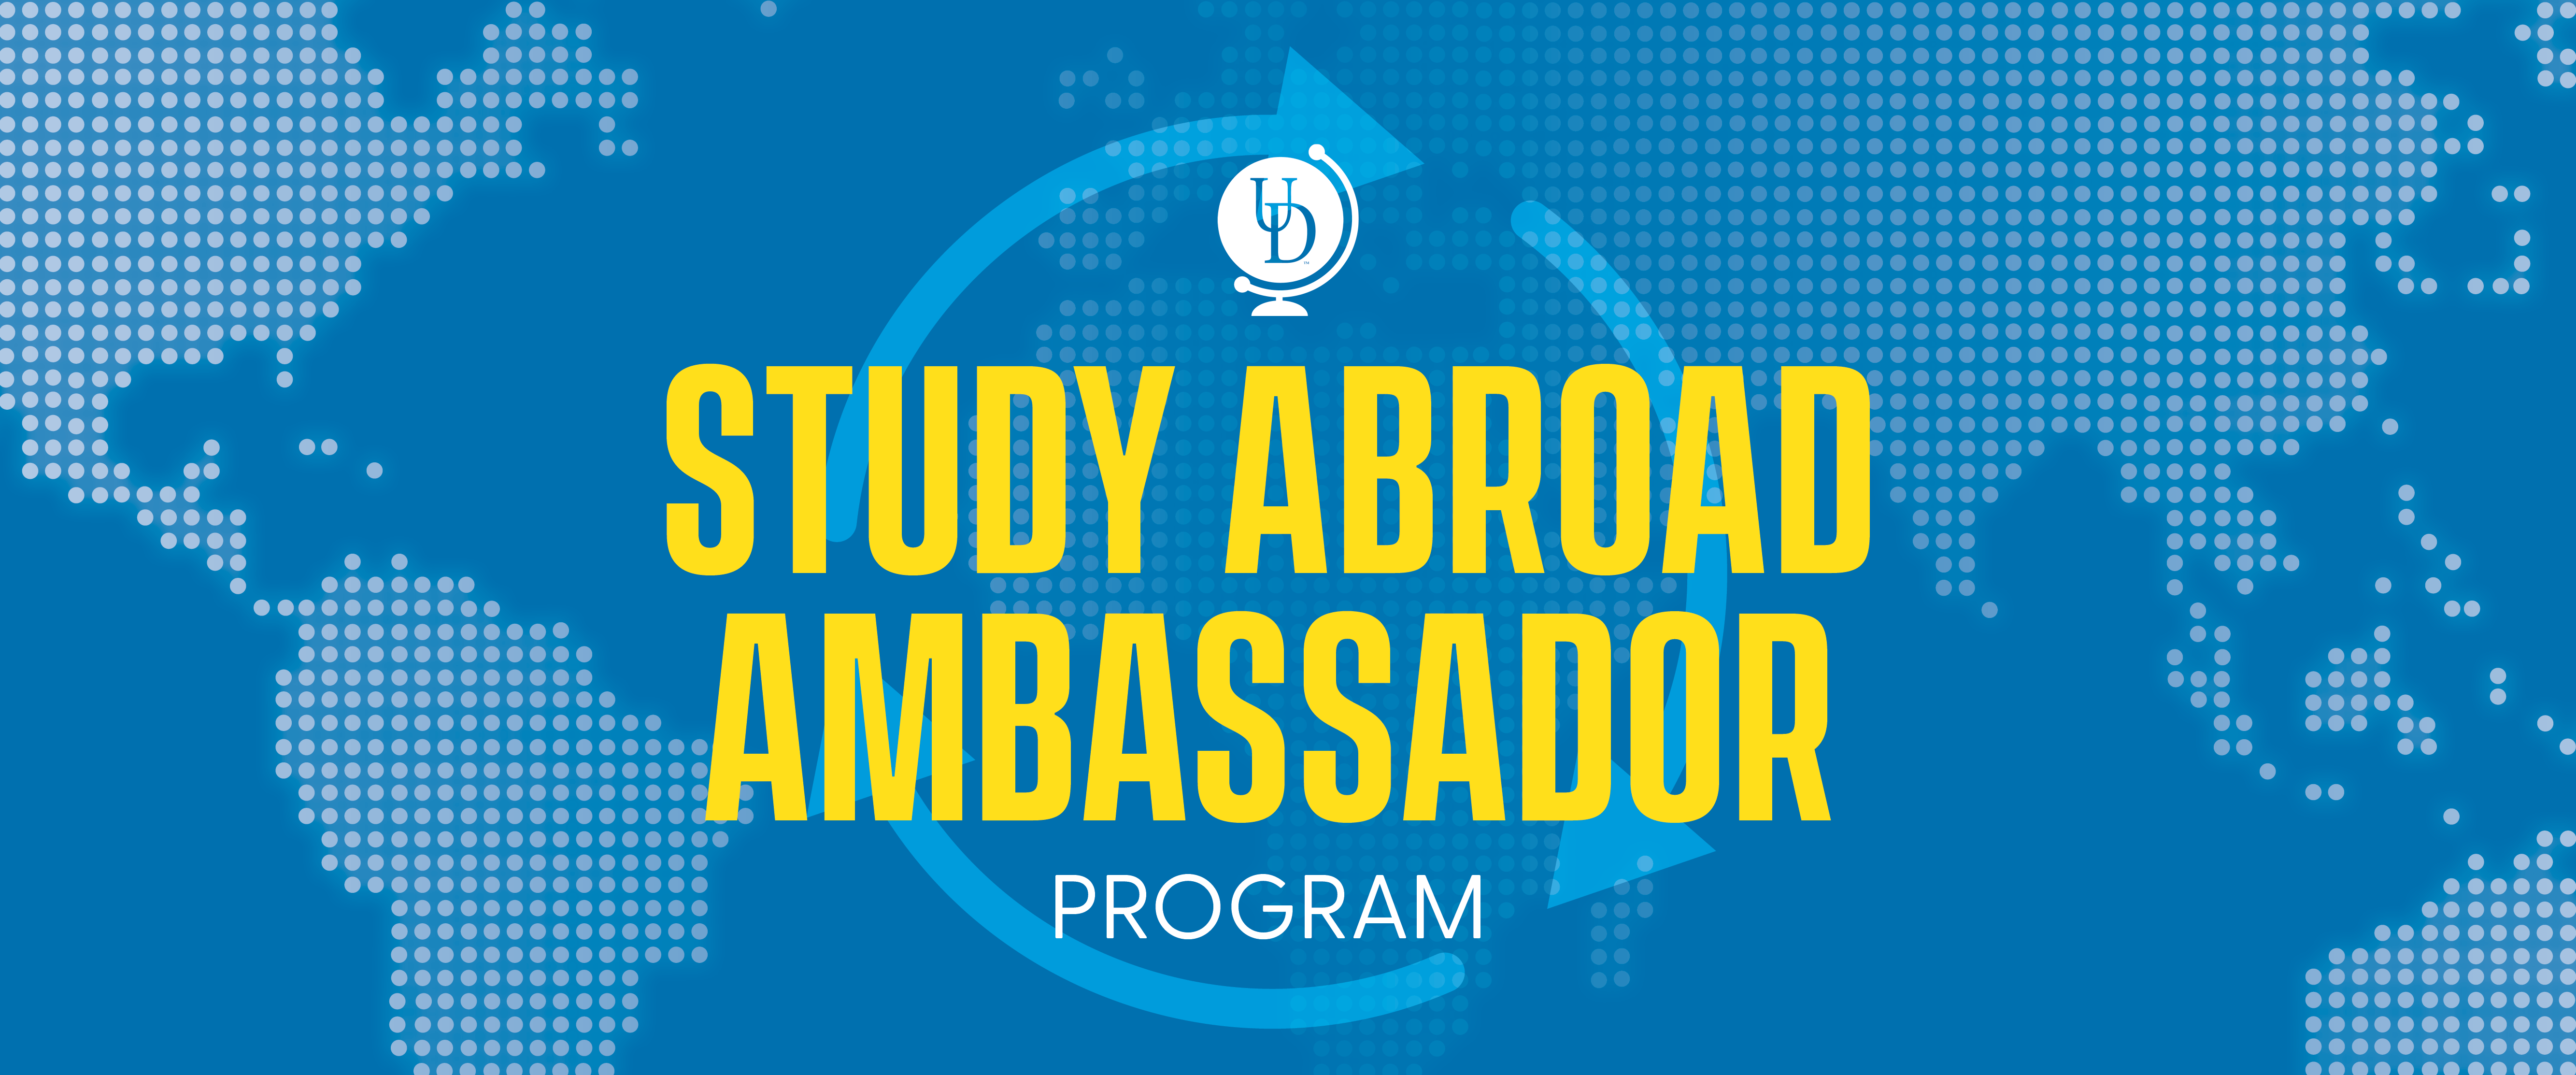 Study Abroad Ambassador program